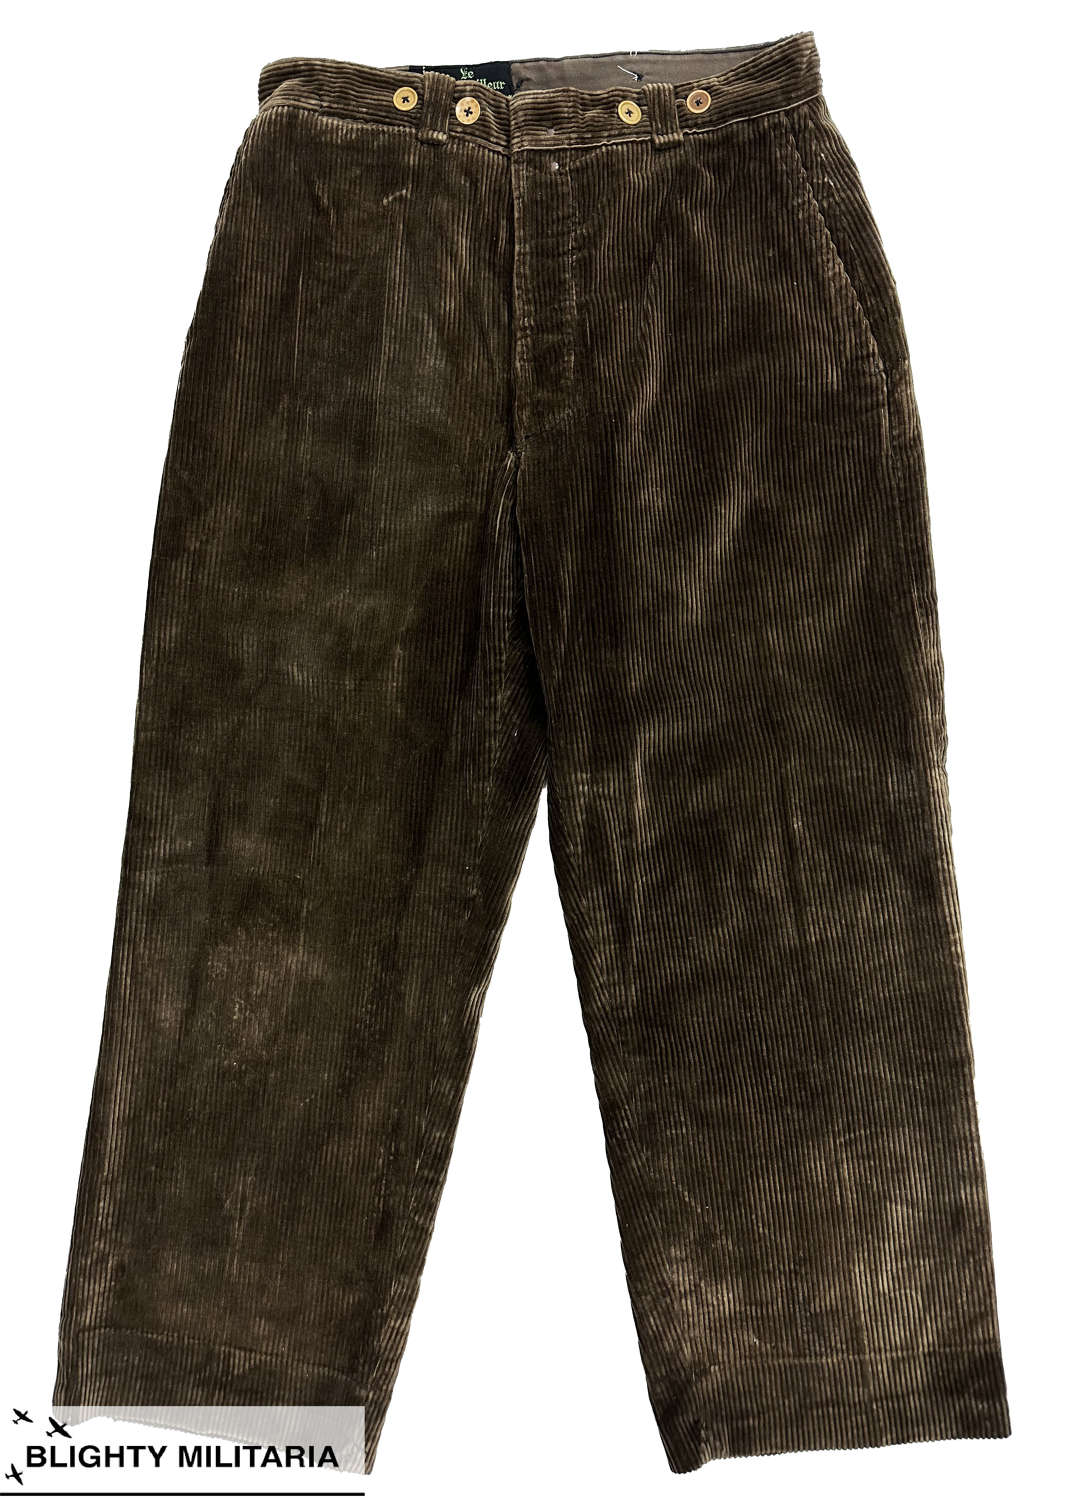 Original 1940s French Corduroy Work Trousers - Size 33x29